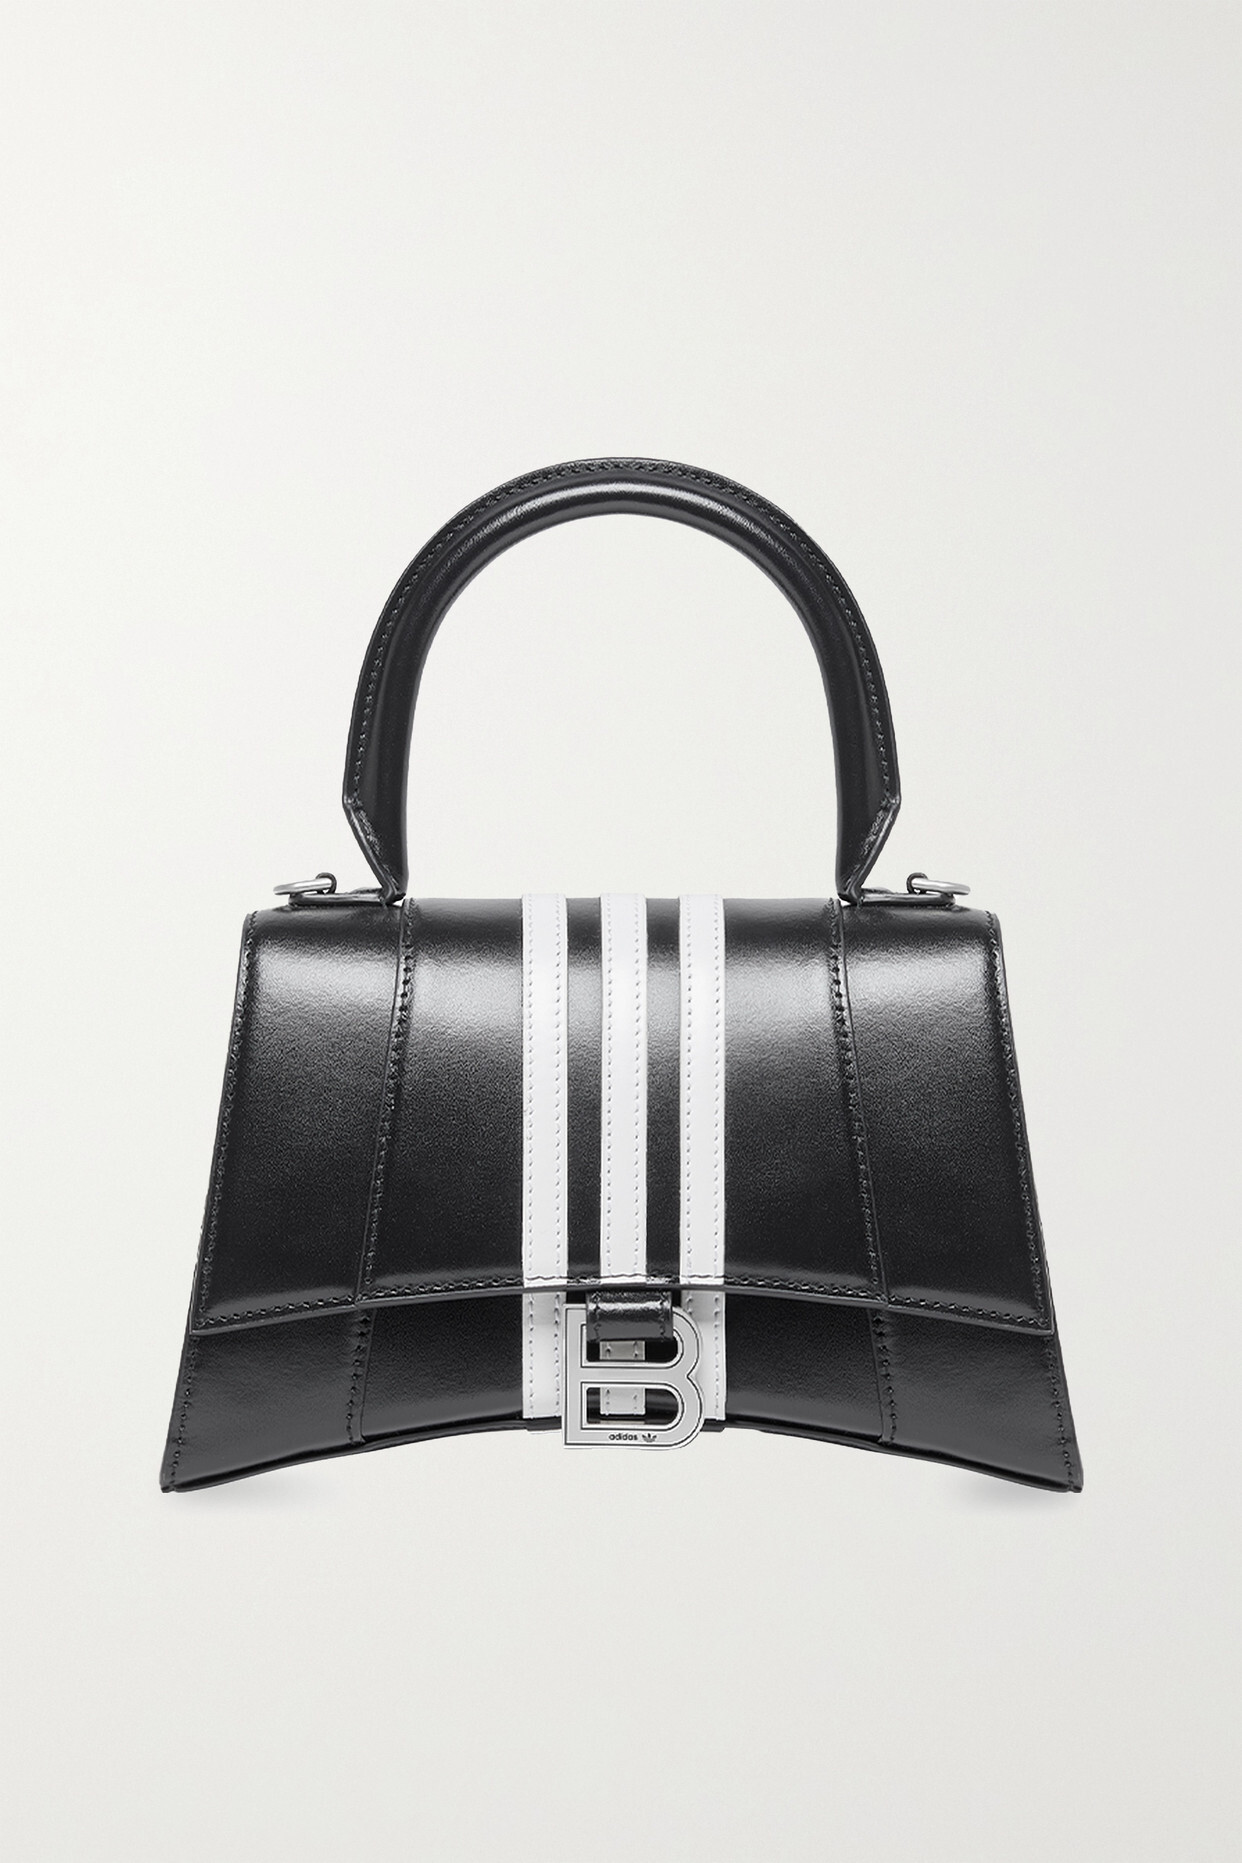 Balenciaga - + Adidas Hourglass Xs Striped Leather Tote - Black